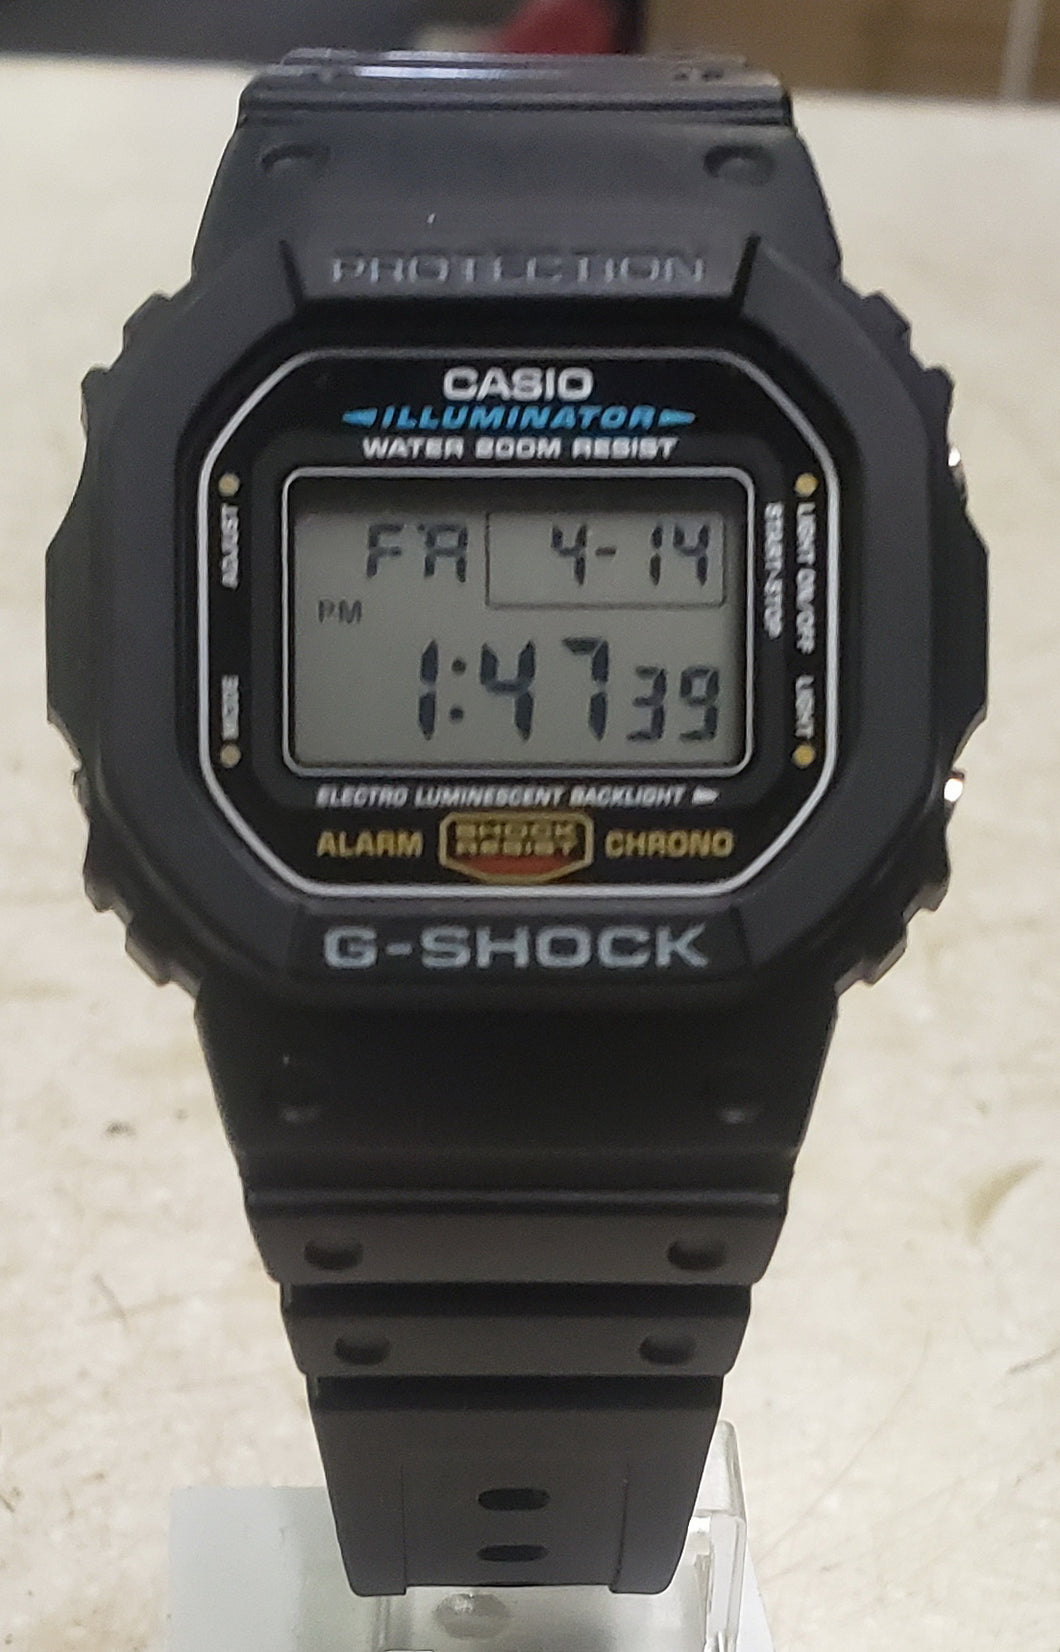 CASIO 3229 DW-5600E Men's G-Shock Watch - Black